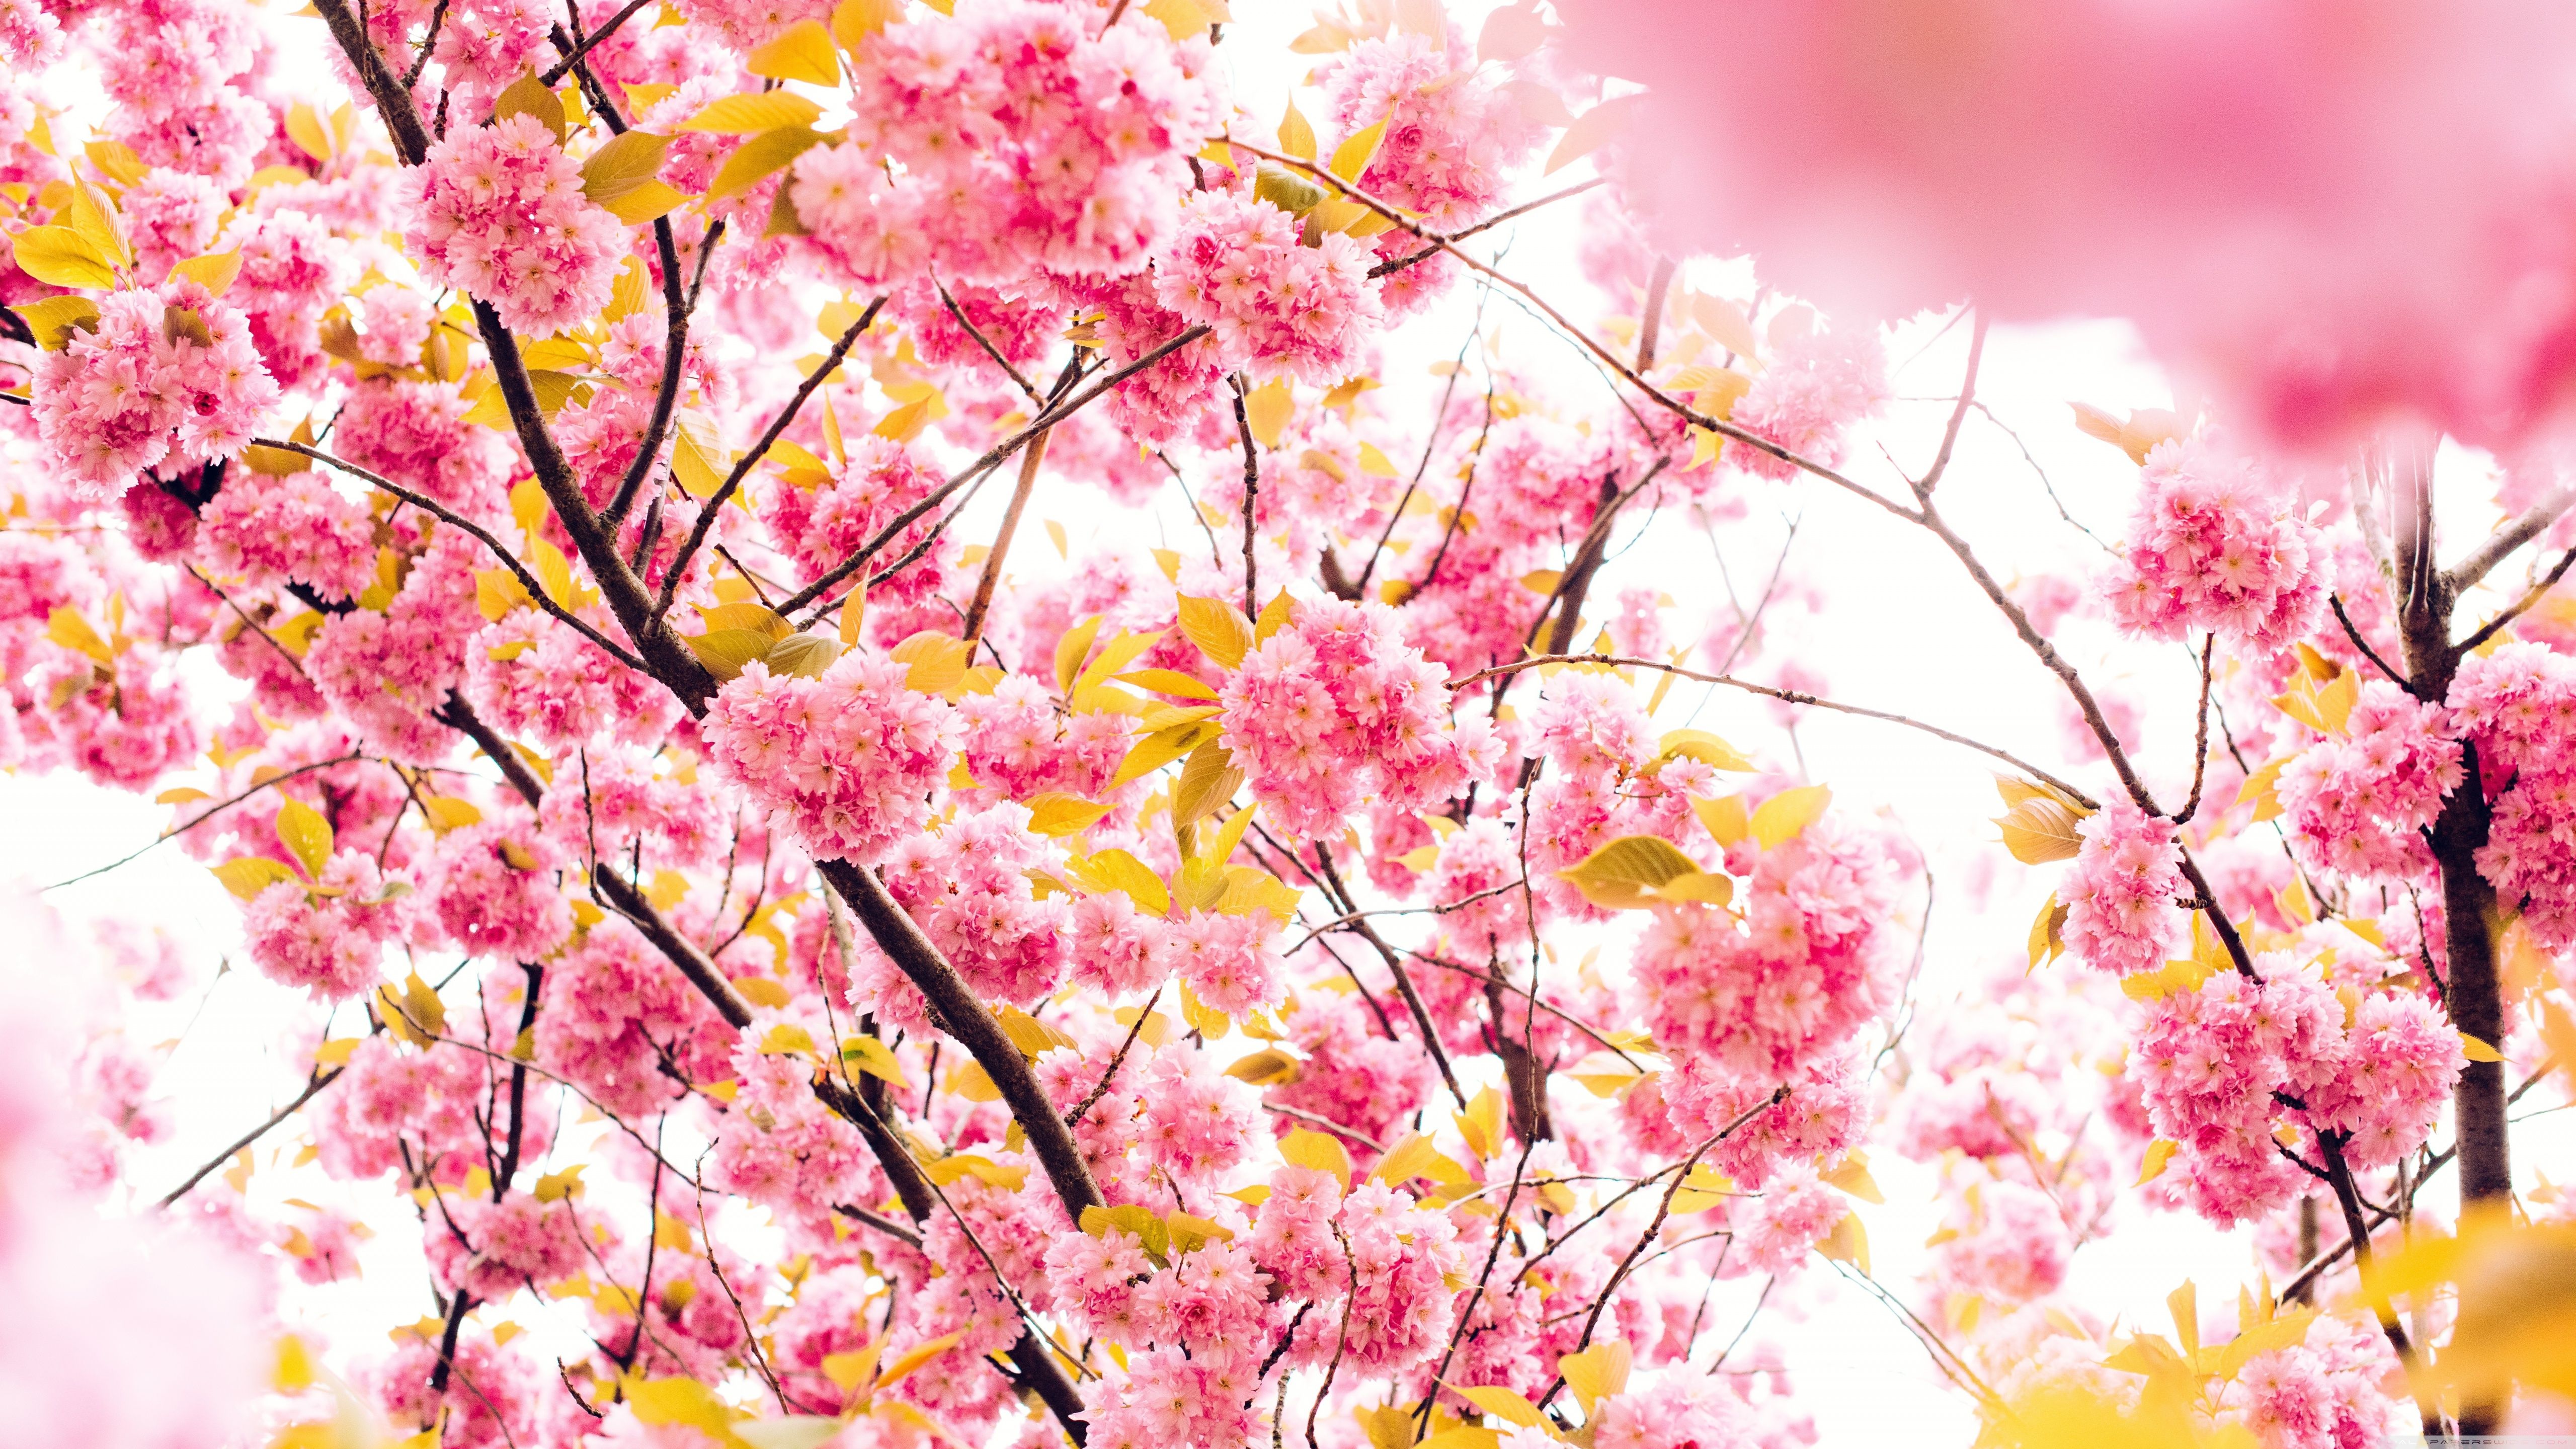 Japanese Cherry Blossom Tree Ultra HD Desktop Background Wallpaper for 4K UHD TV, Widescreen & UltraWide Desktop & Laptop, Multi Display, Dual Monitor, Tablet